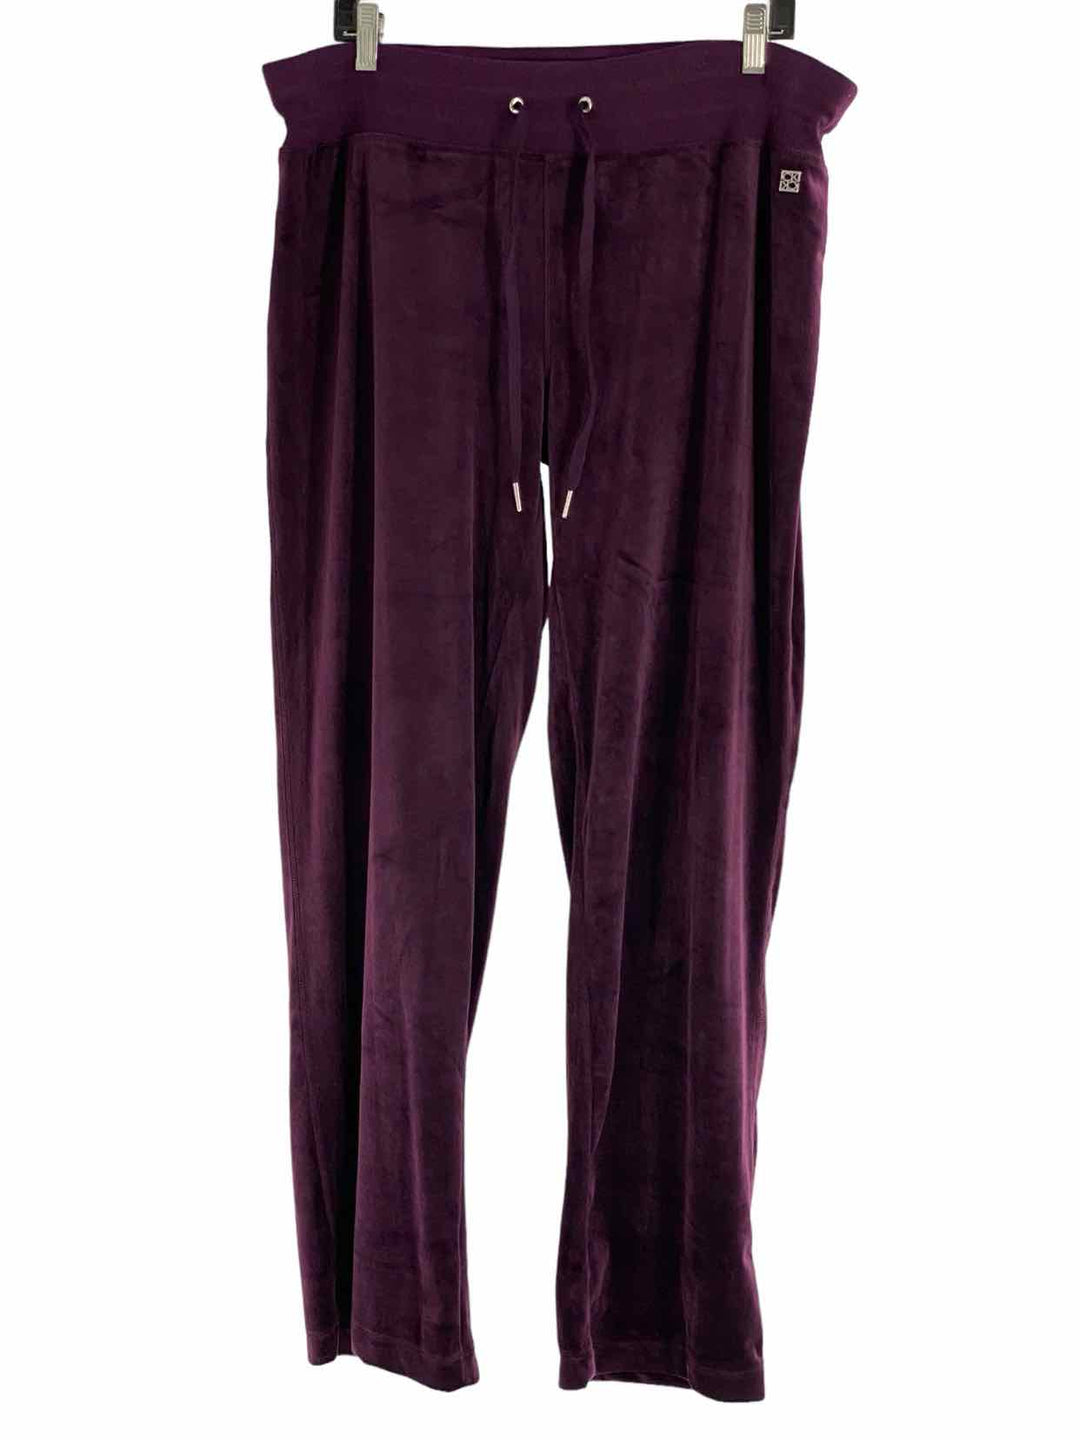 Calvin Klein Size XL Purple Velour Pants